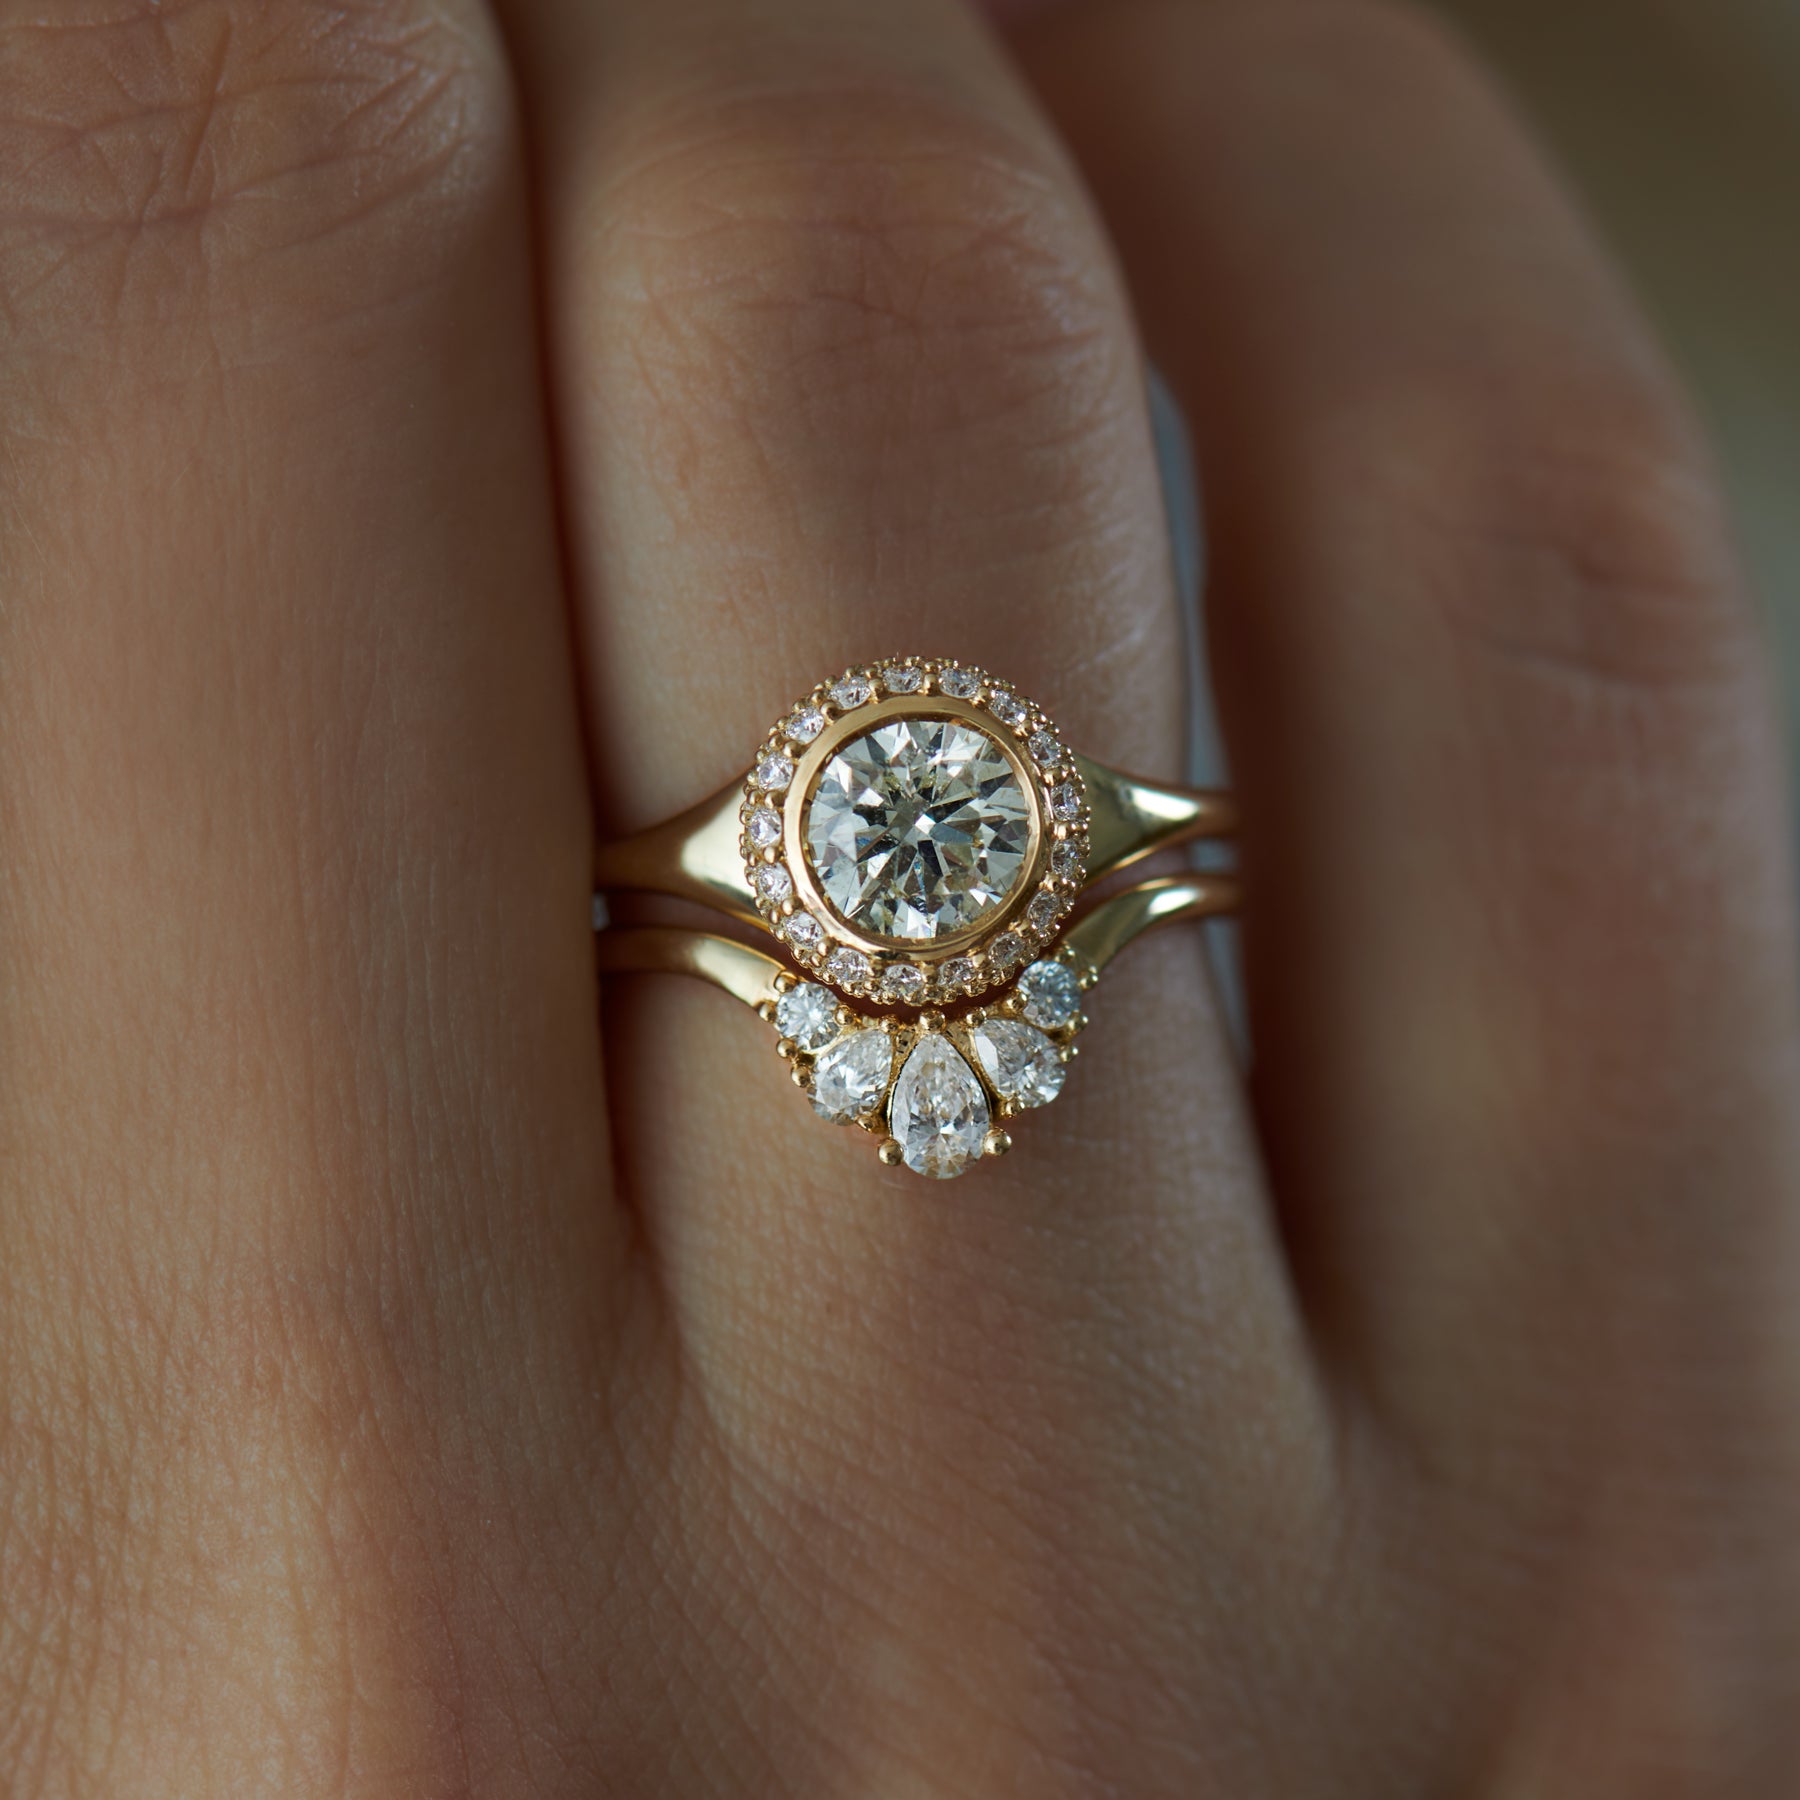 Crown Setting 14K WHITE GOLD ROUND CUT SIMULATED DIAMOND ENGAGEMENT RING  3.00CT | eBay